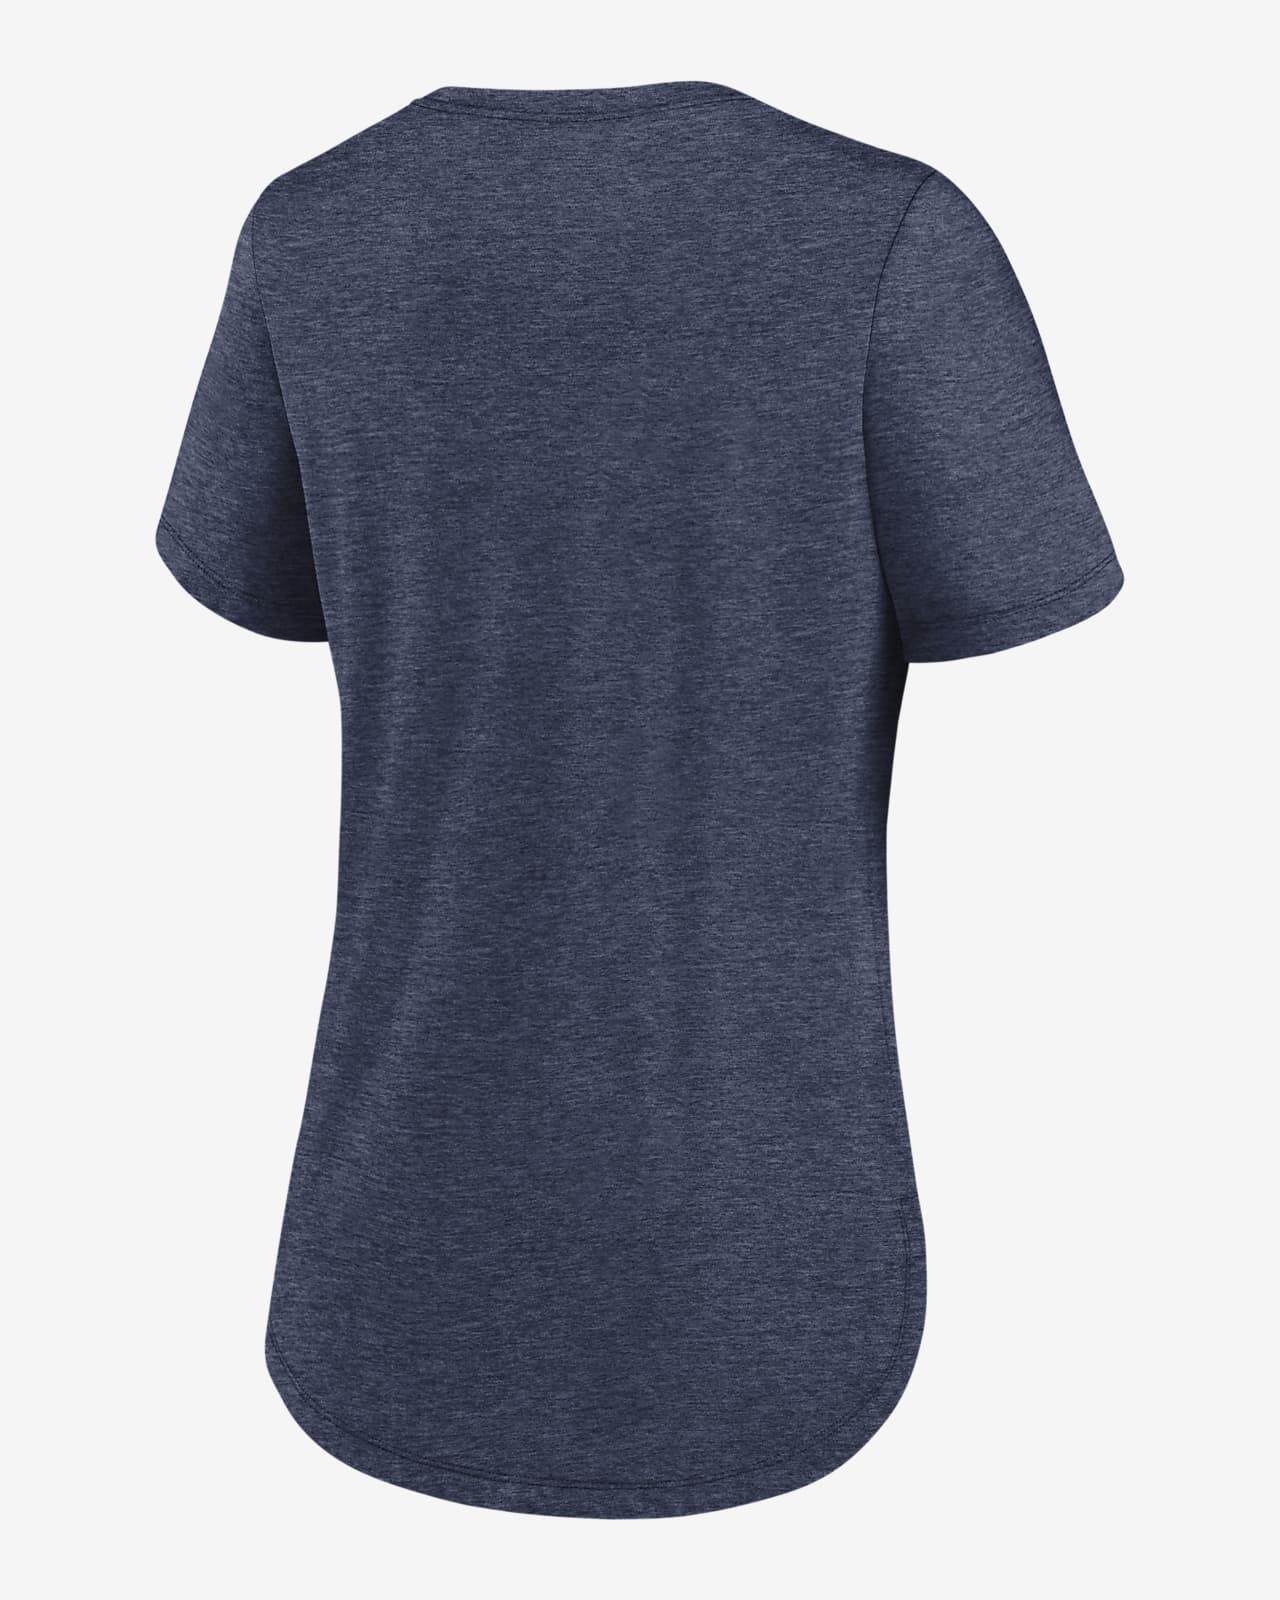 Nike City Connect (MLB Kansas City Royals) Women's T-Shirt.